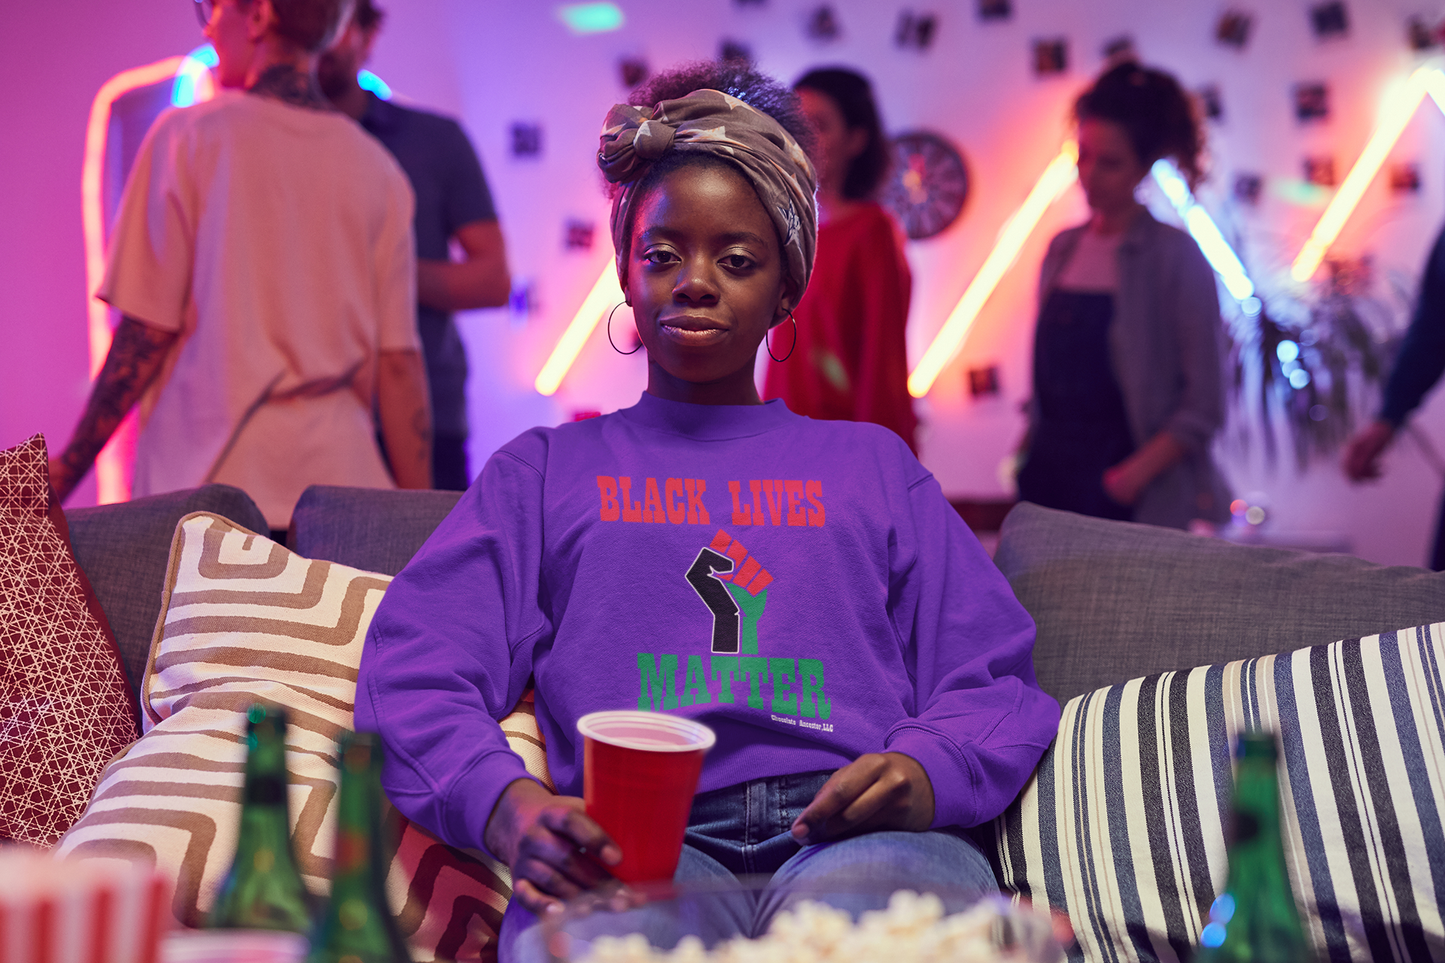 Black Lives Matter Pan African Unisex Crewneck Sweatshirt (Style 2) - Chocolate Ancestor